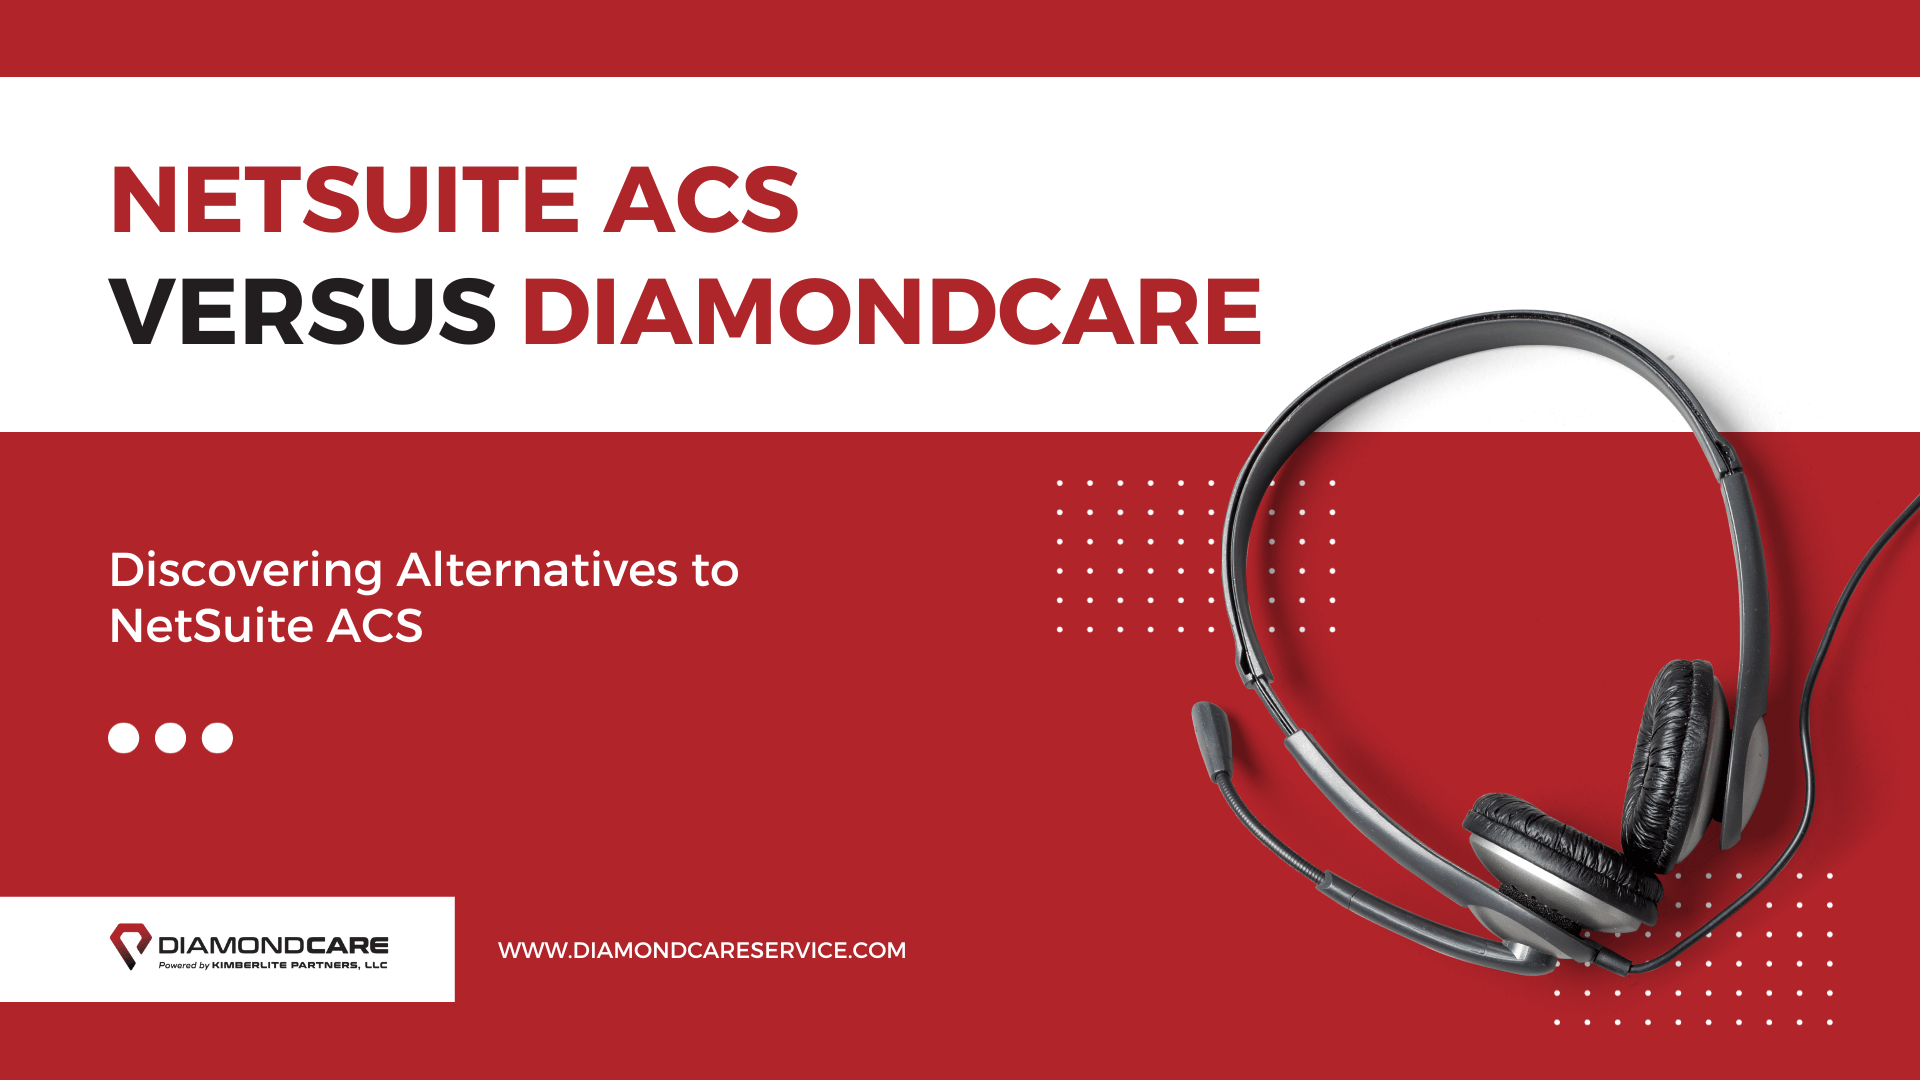 NetSuite ACS vs. Kimberlite's DiamondCare - A Comprehensive Guide to NetSuite ACS Alternatives